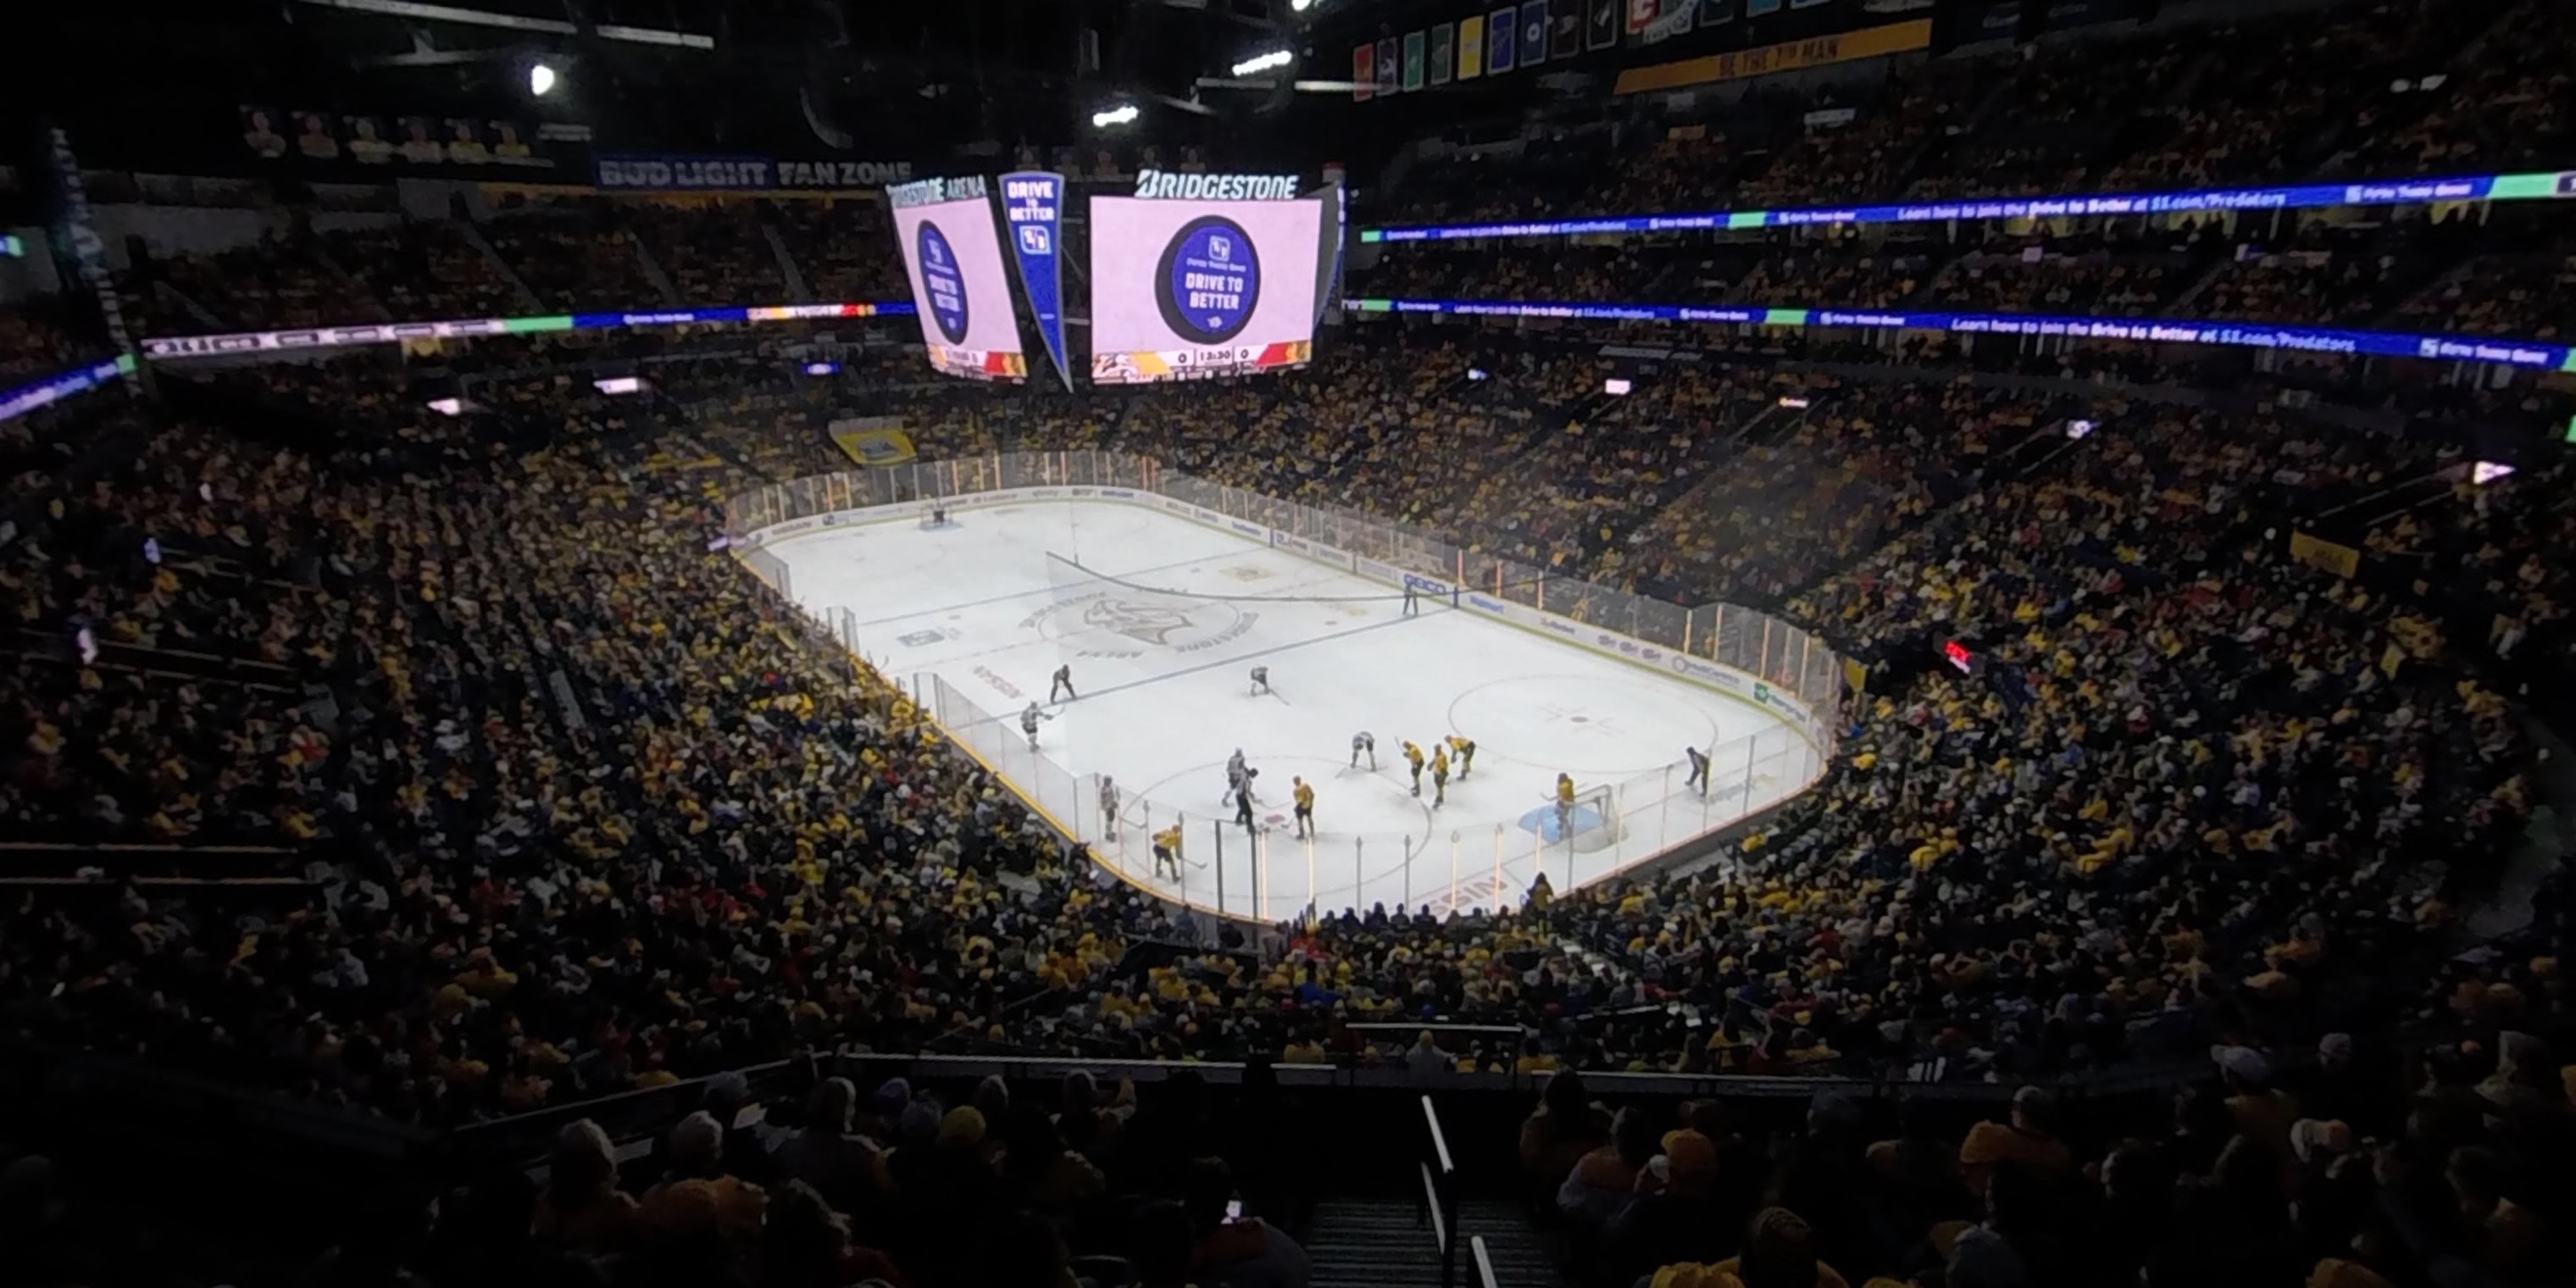 section 221 panoramic seat view  for hockey - bridgestone arena